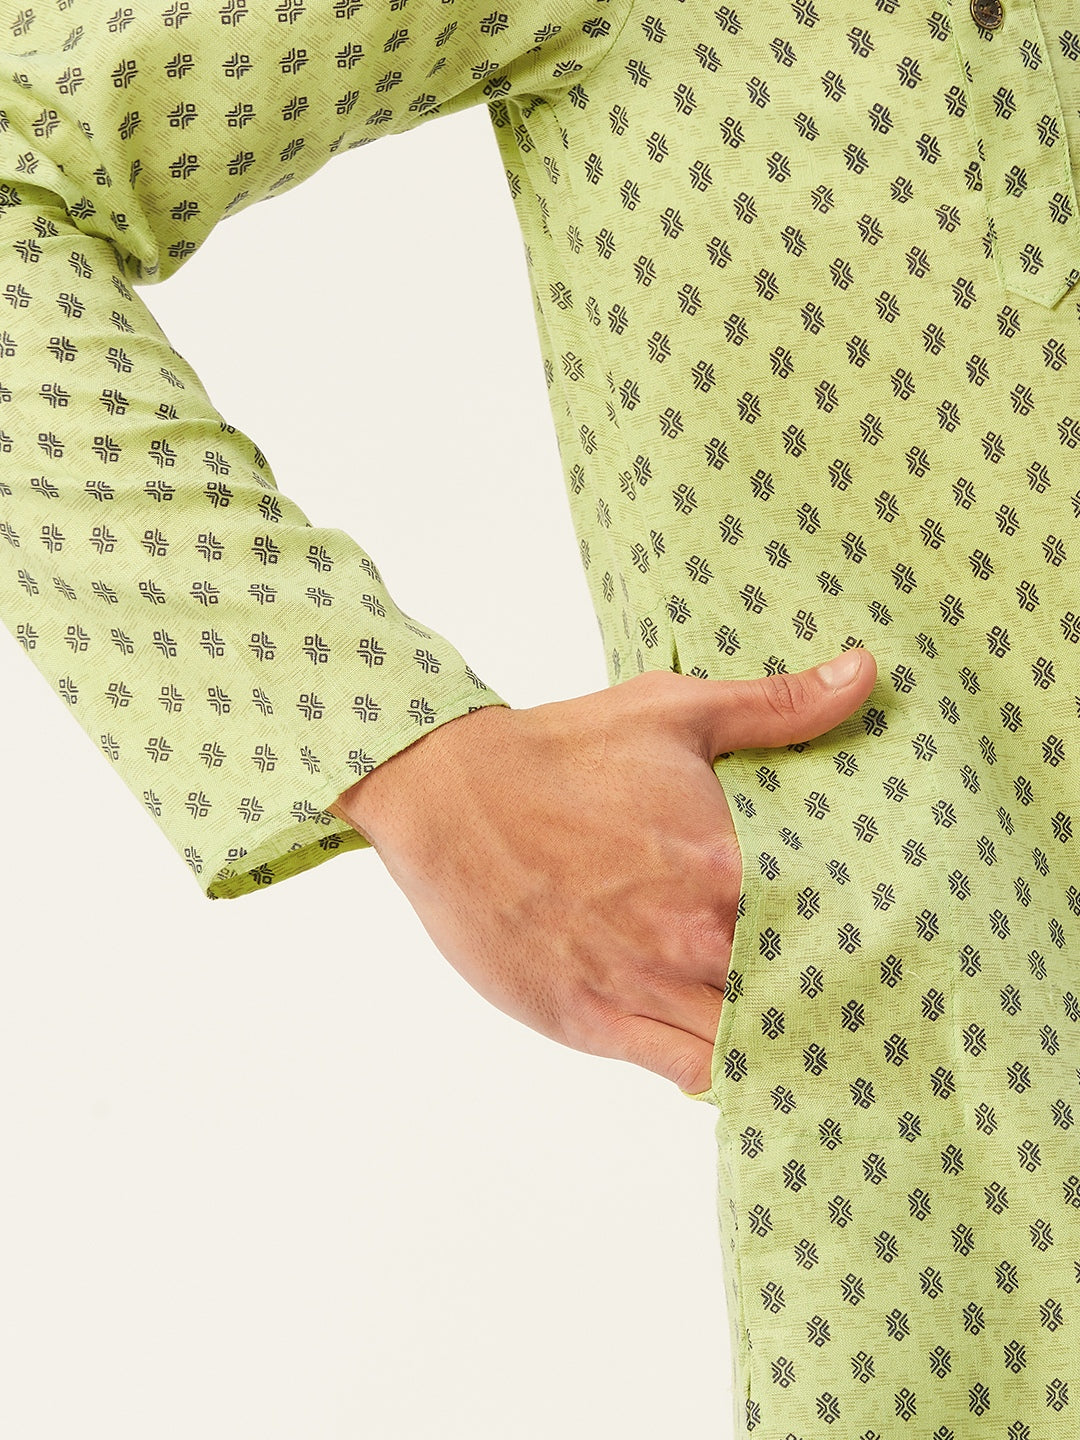 Jompers Men's Green Cotton printed kurta Pyjama Set